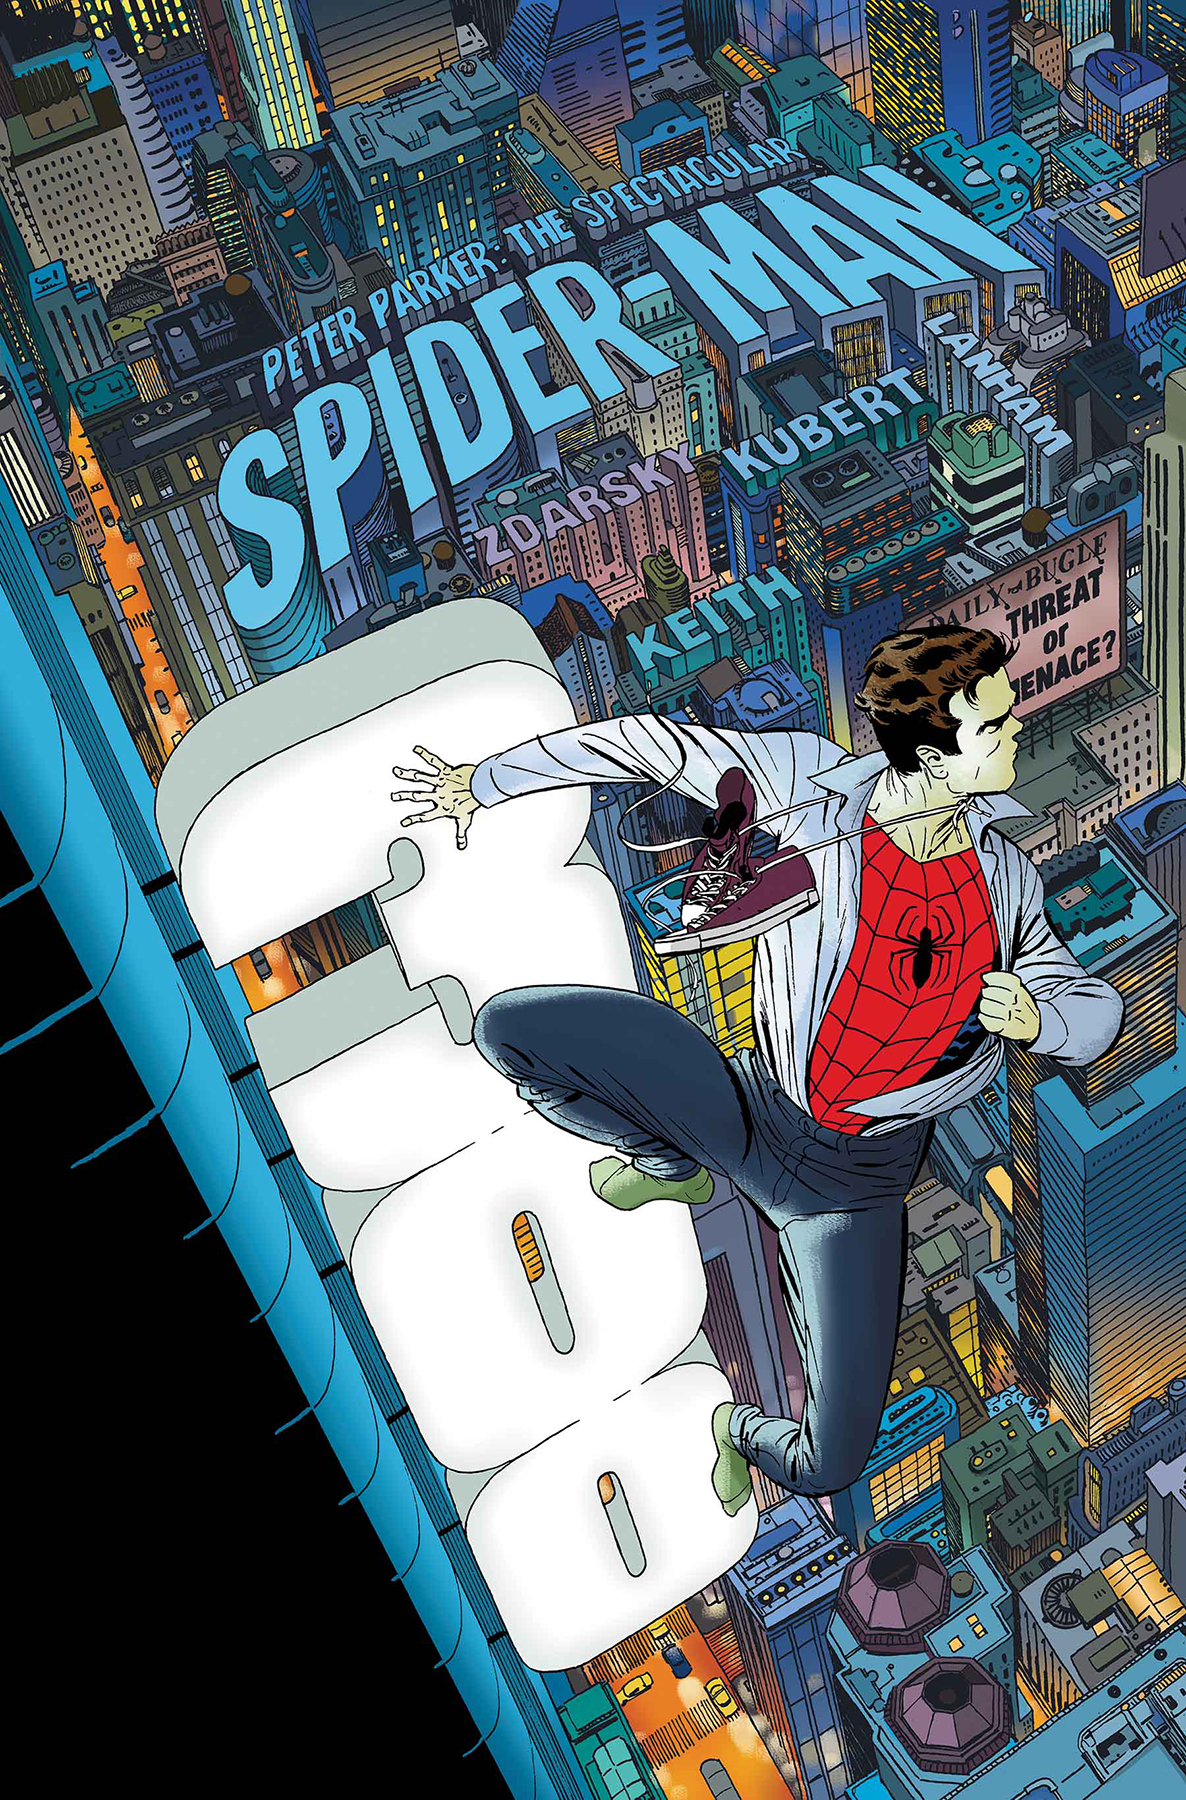 PETER PARKER SPECTACULAR SPIDER-MAN #300 LEG